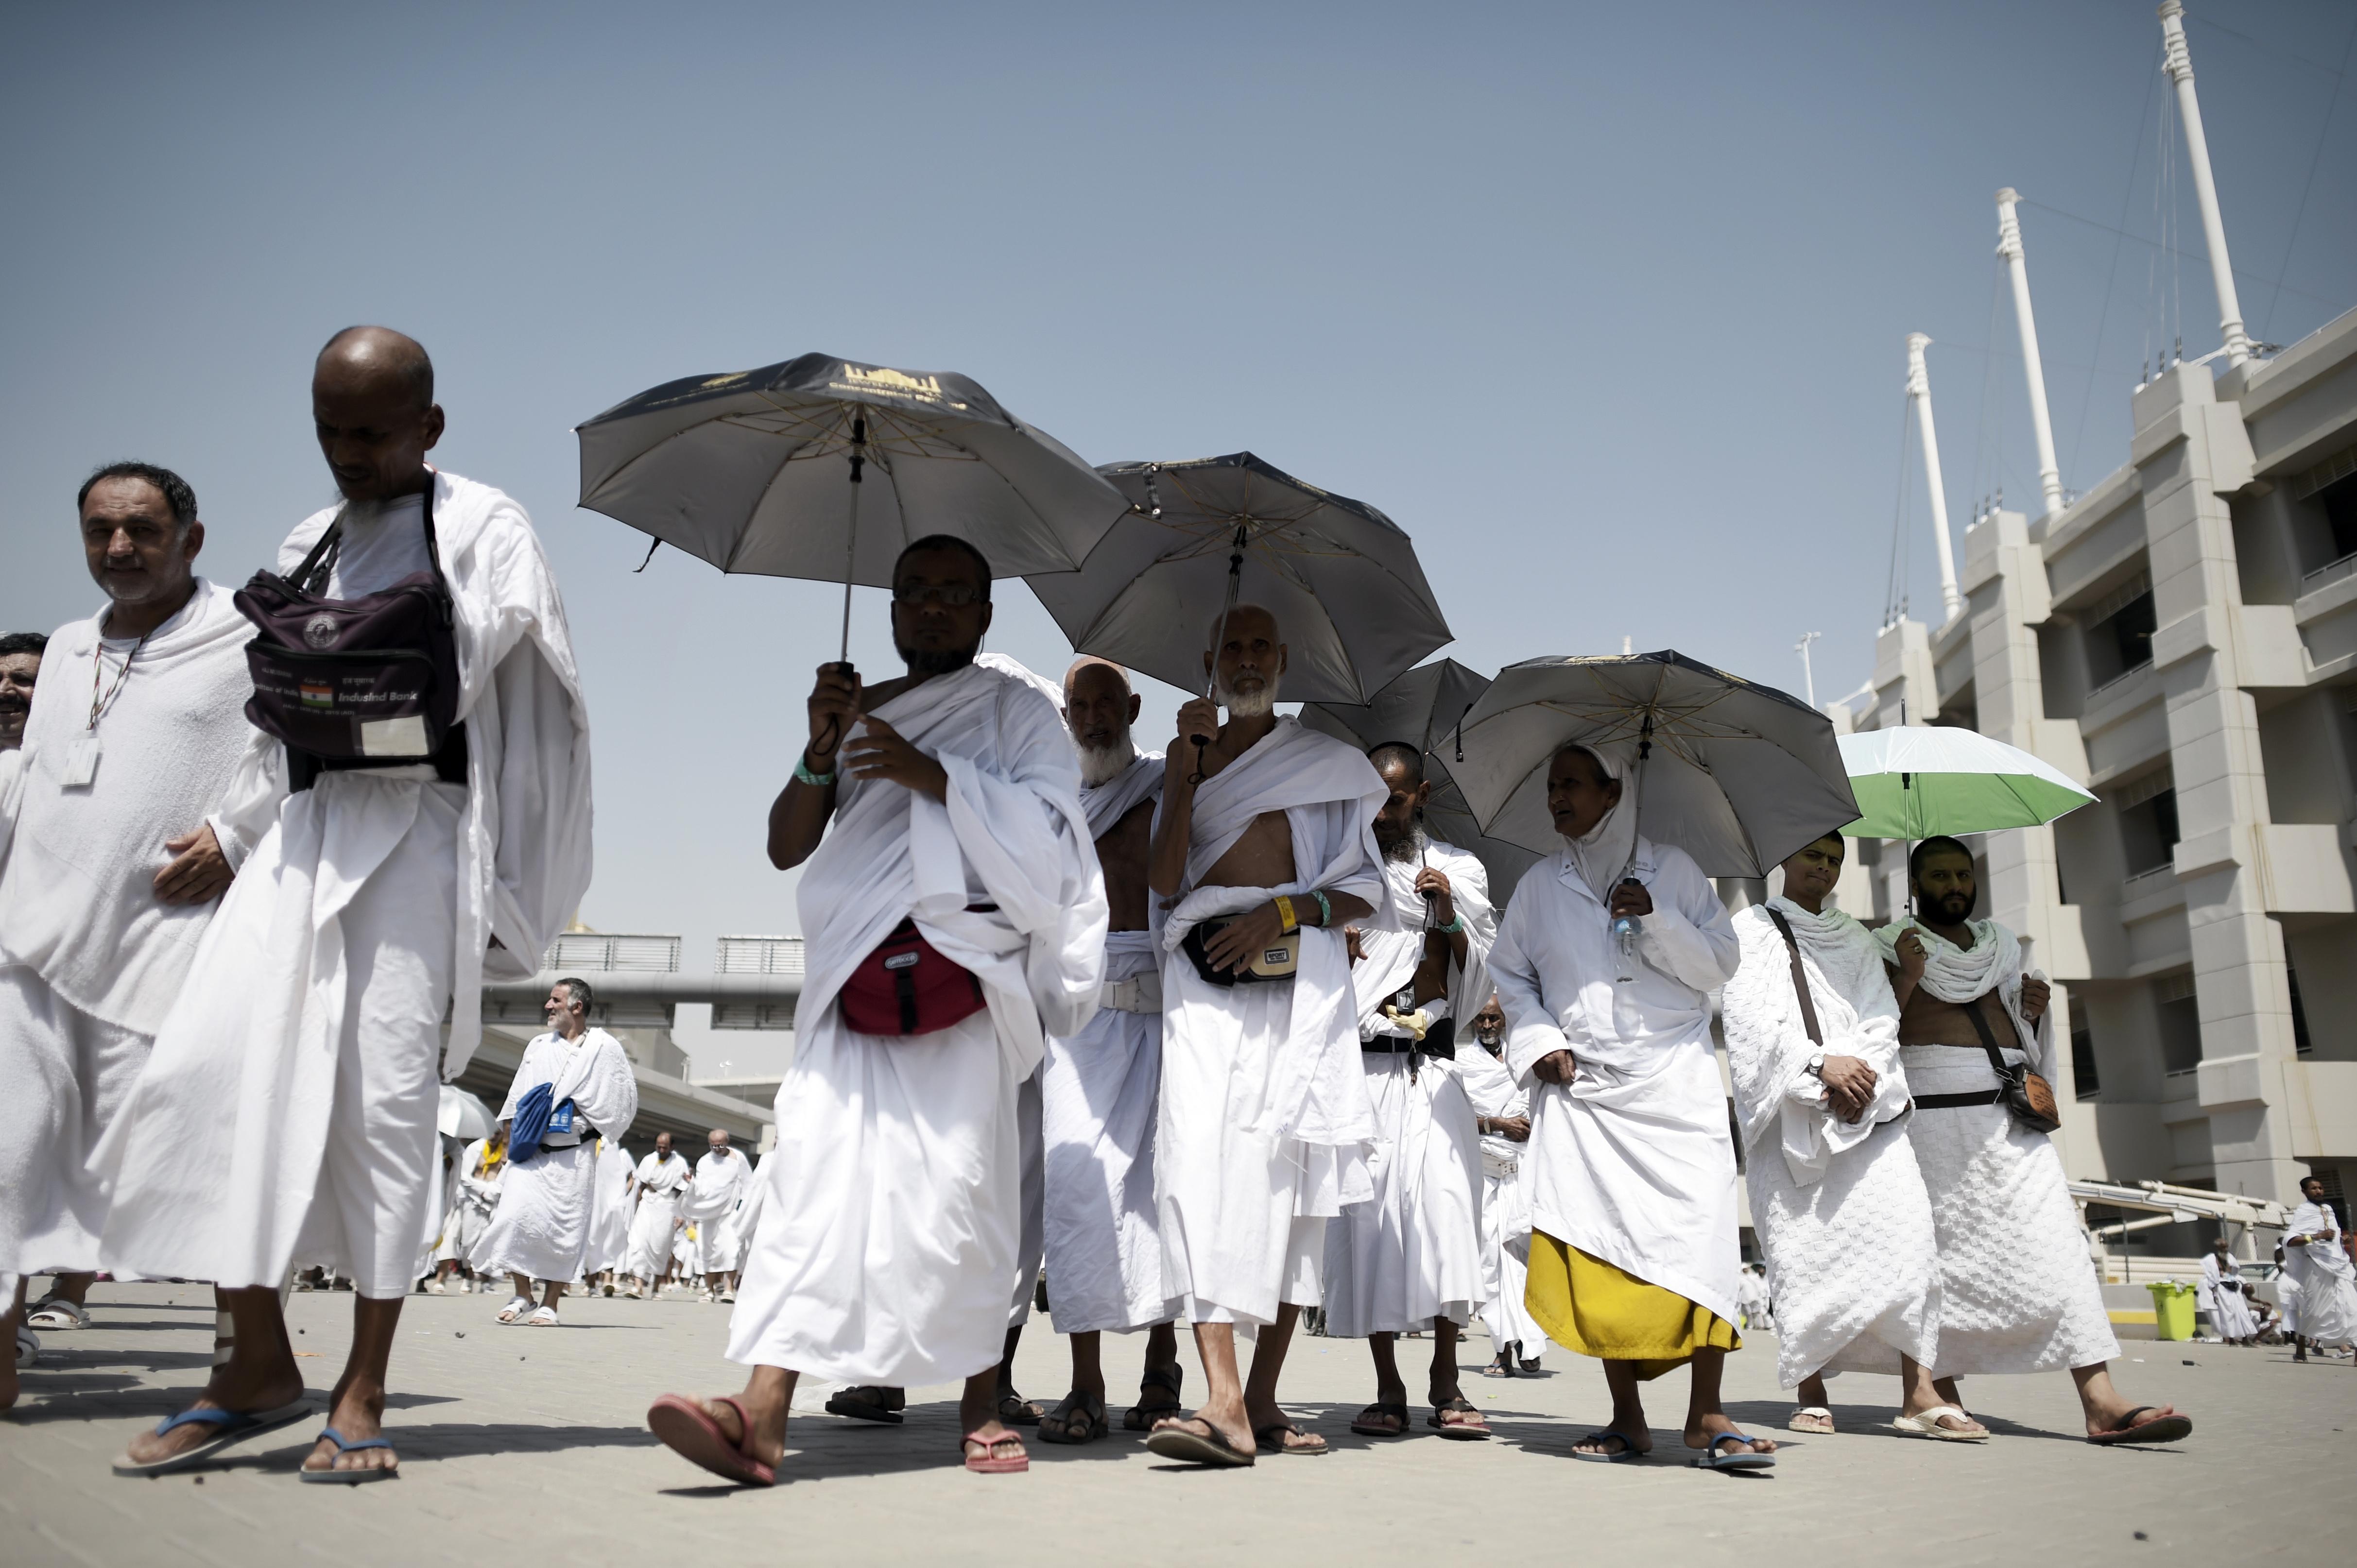 How do pilgrims beat the heat during Hajj?